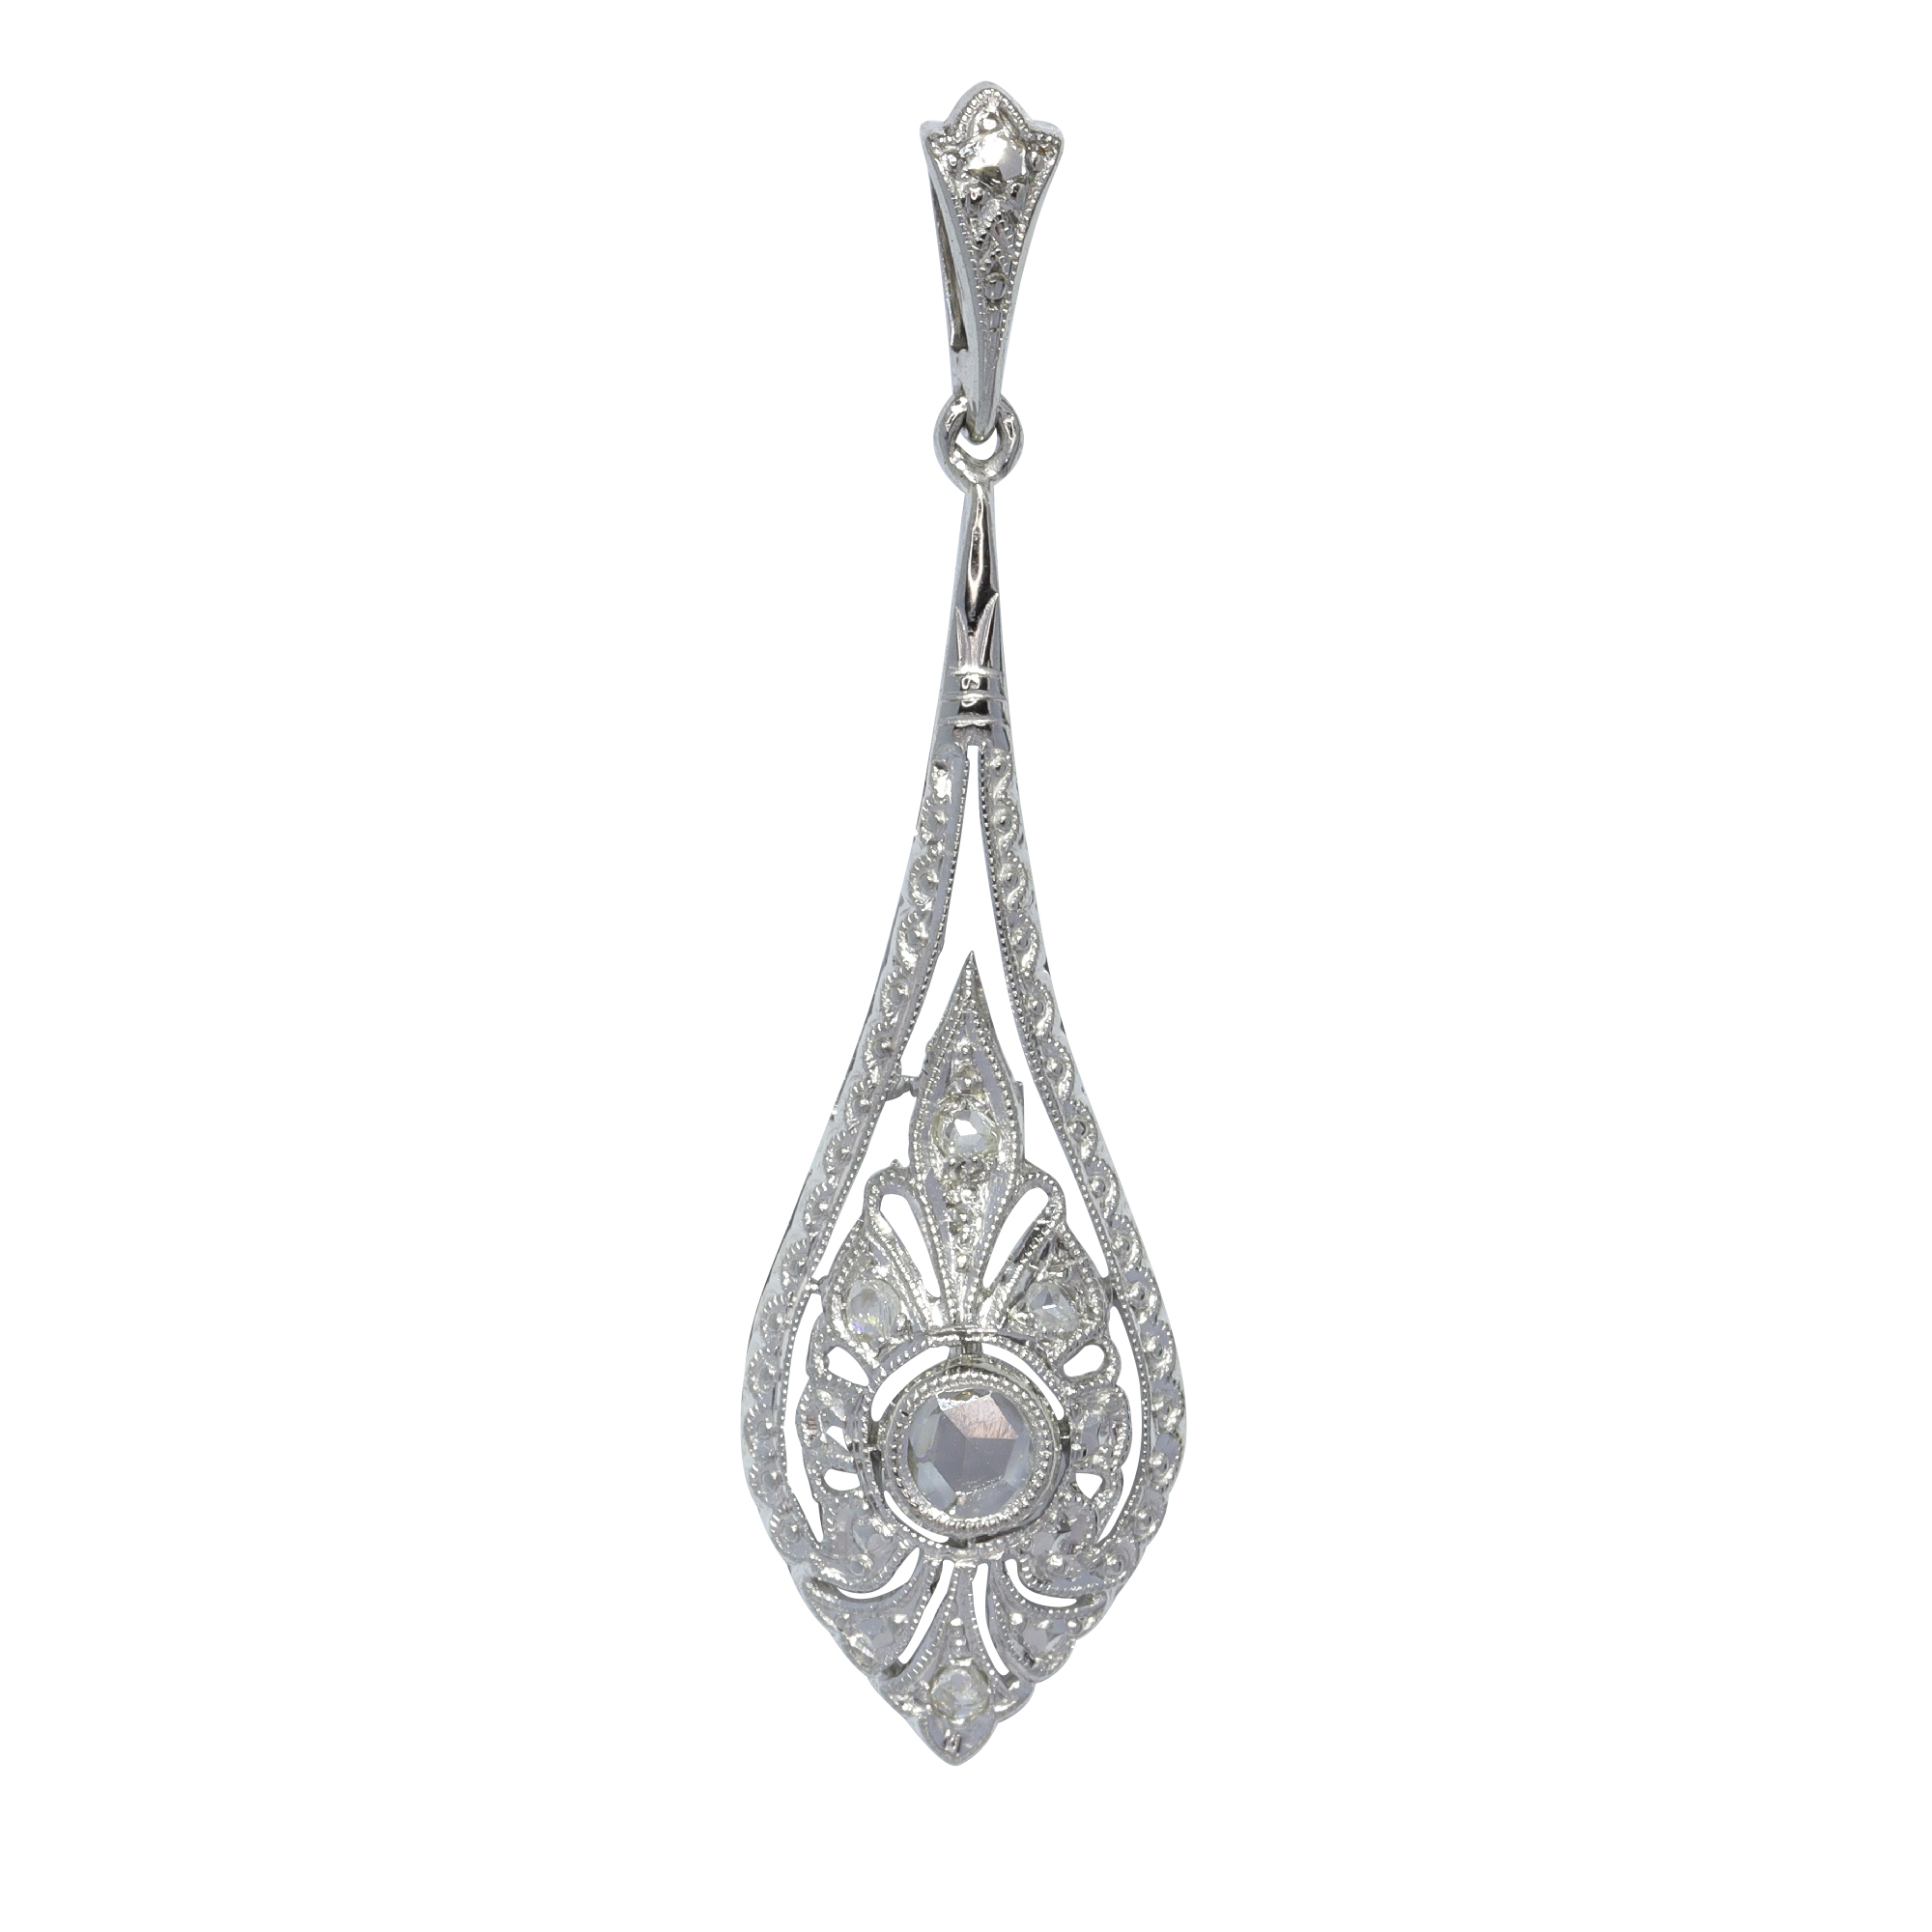 Vintage 1920's Belle Epoque / Art Deco diamond pendant